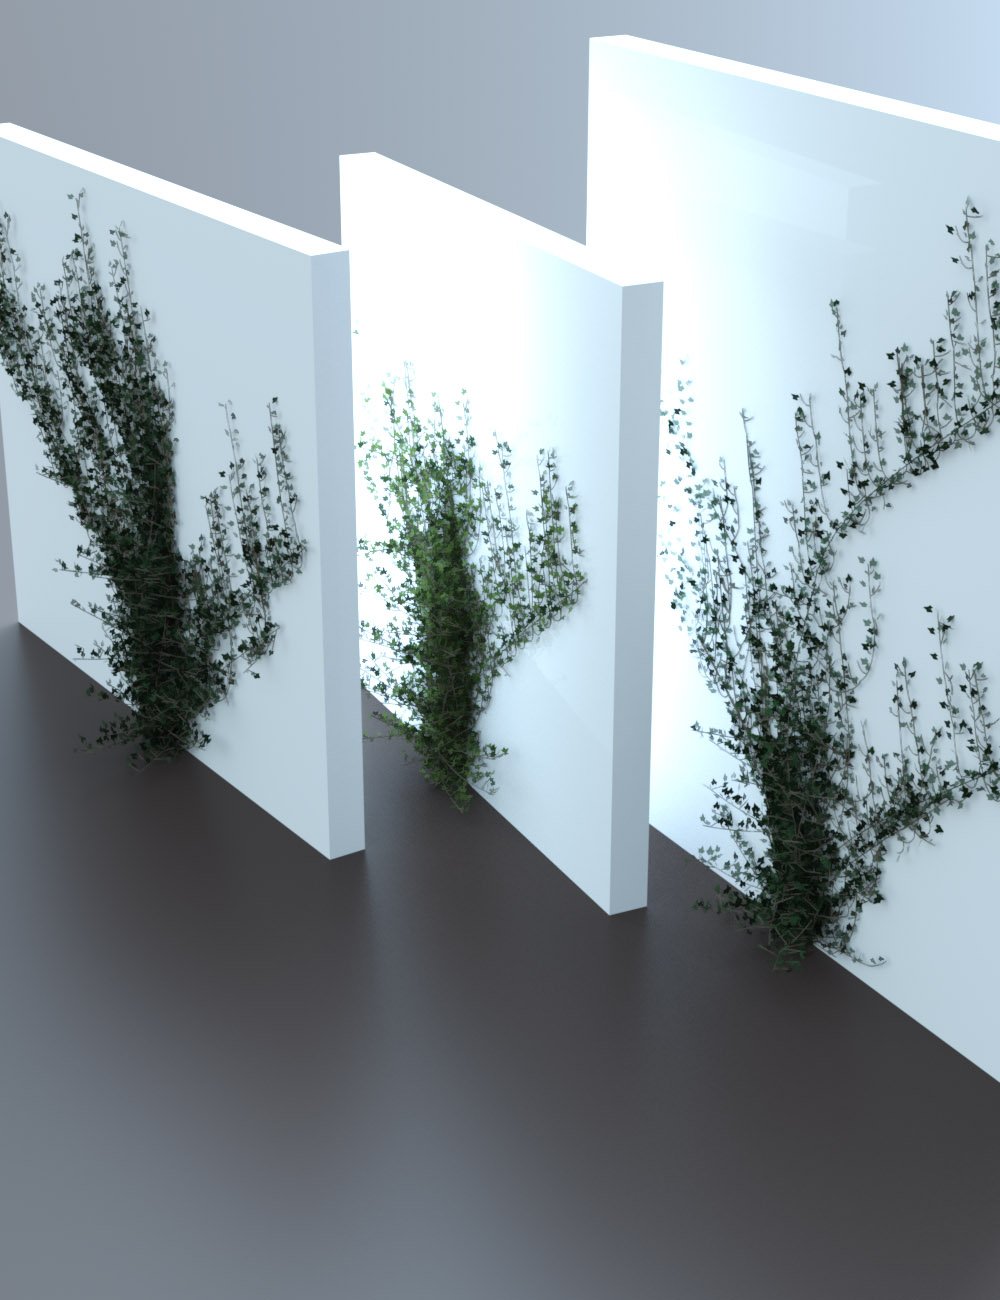 Climbing Vines - Ivy Plants by: MartinJFrost, 3D Models by Daz 3D